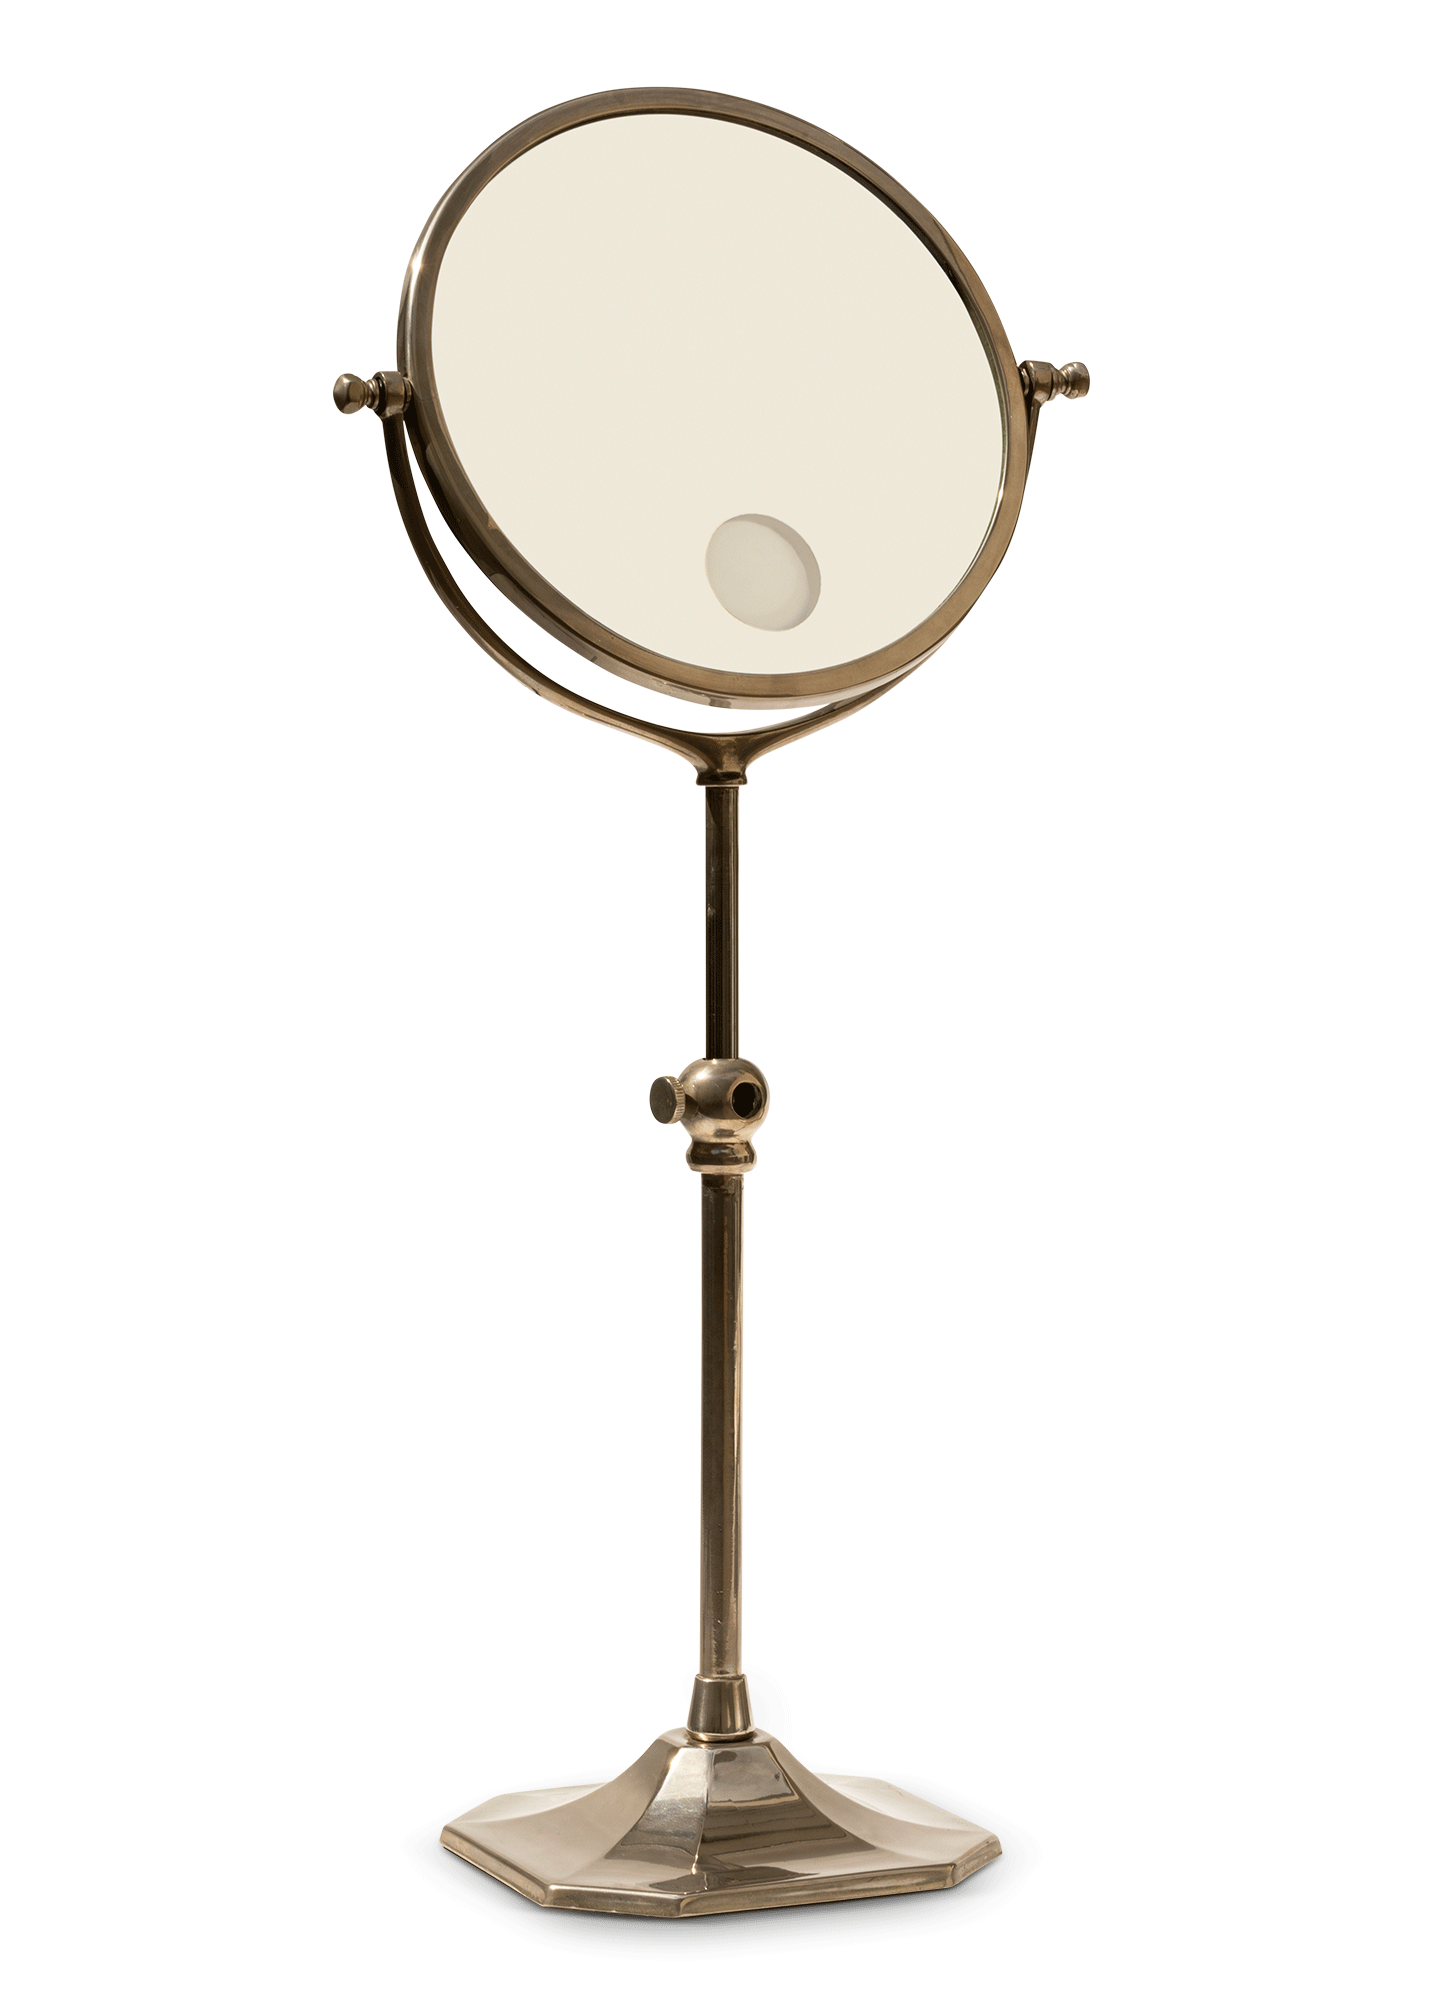 Art Deco French Nickel-Plated Illuminated Vanity Mirror by Brot, 1930s